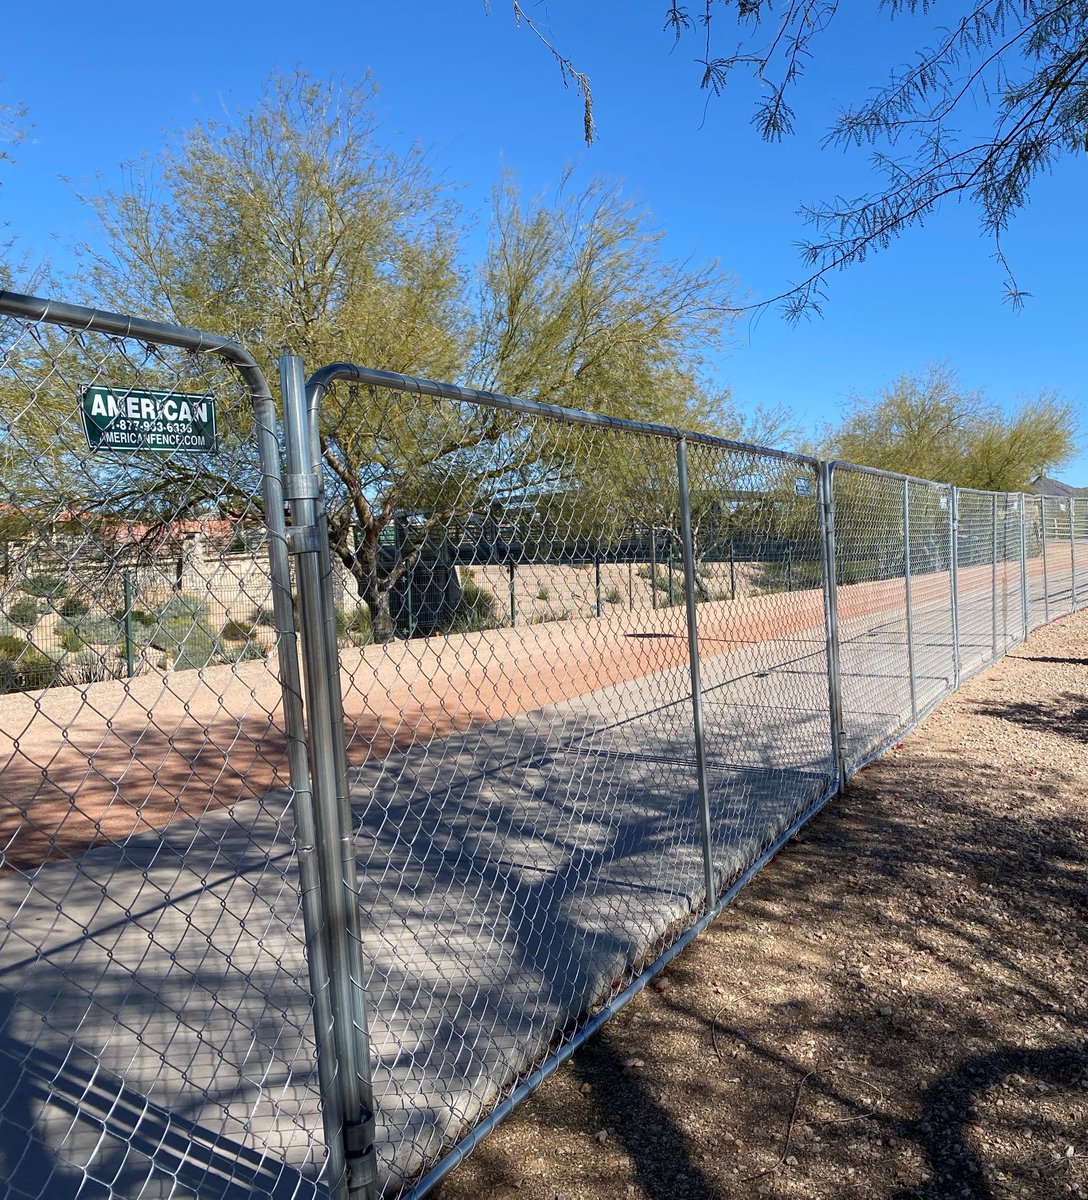 A fresh start for the week ahead. 💪#Fence #Fenceconstruction #Construction #Temporaryfence #Mondayblues #Arizona @Newmexico #California #utah #Kansas #Nevada #Colorado #Florida #Fenceinstall #Fencinginstallation